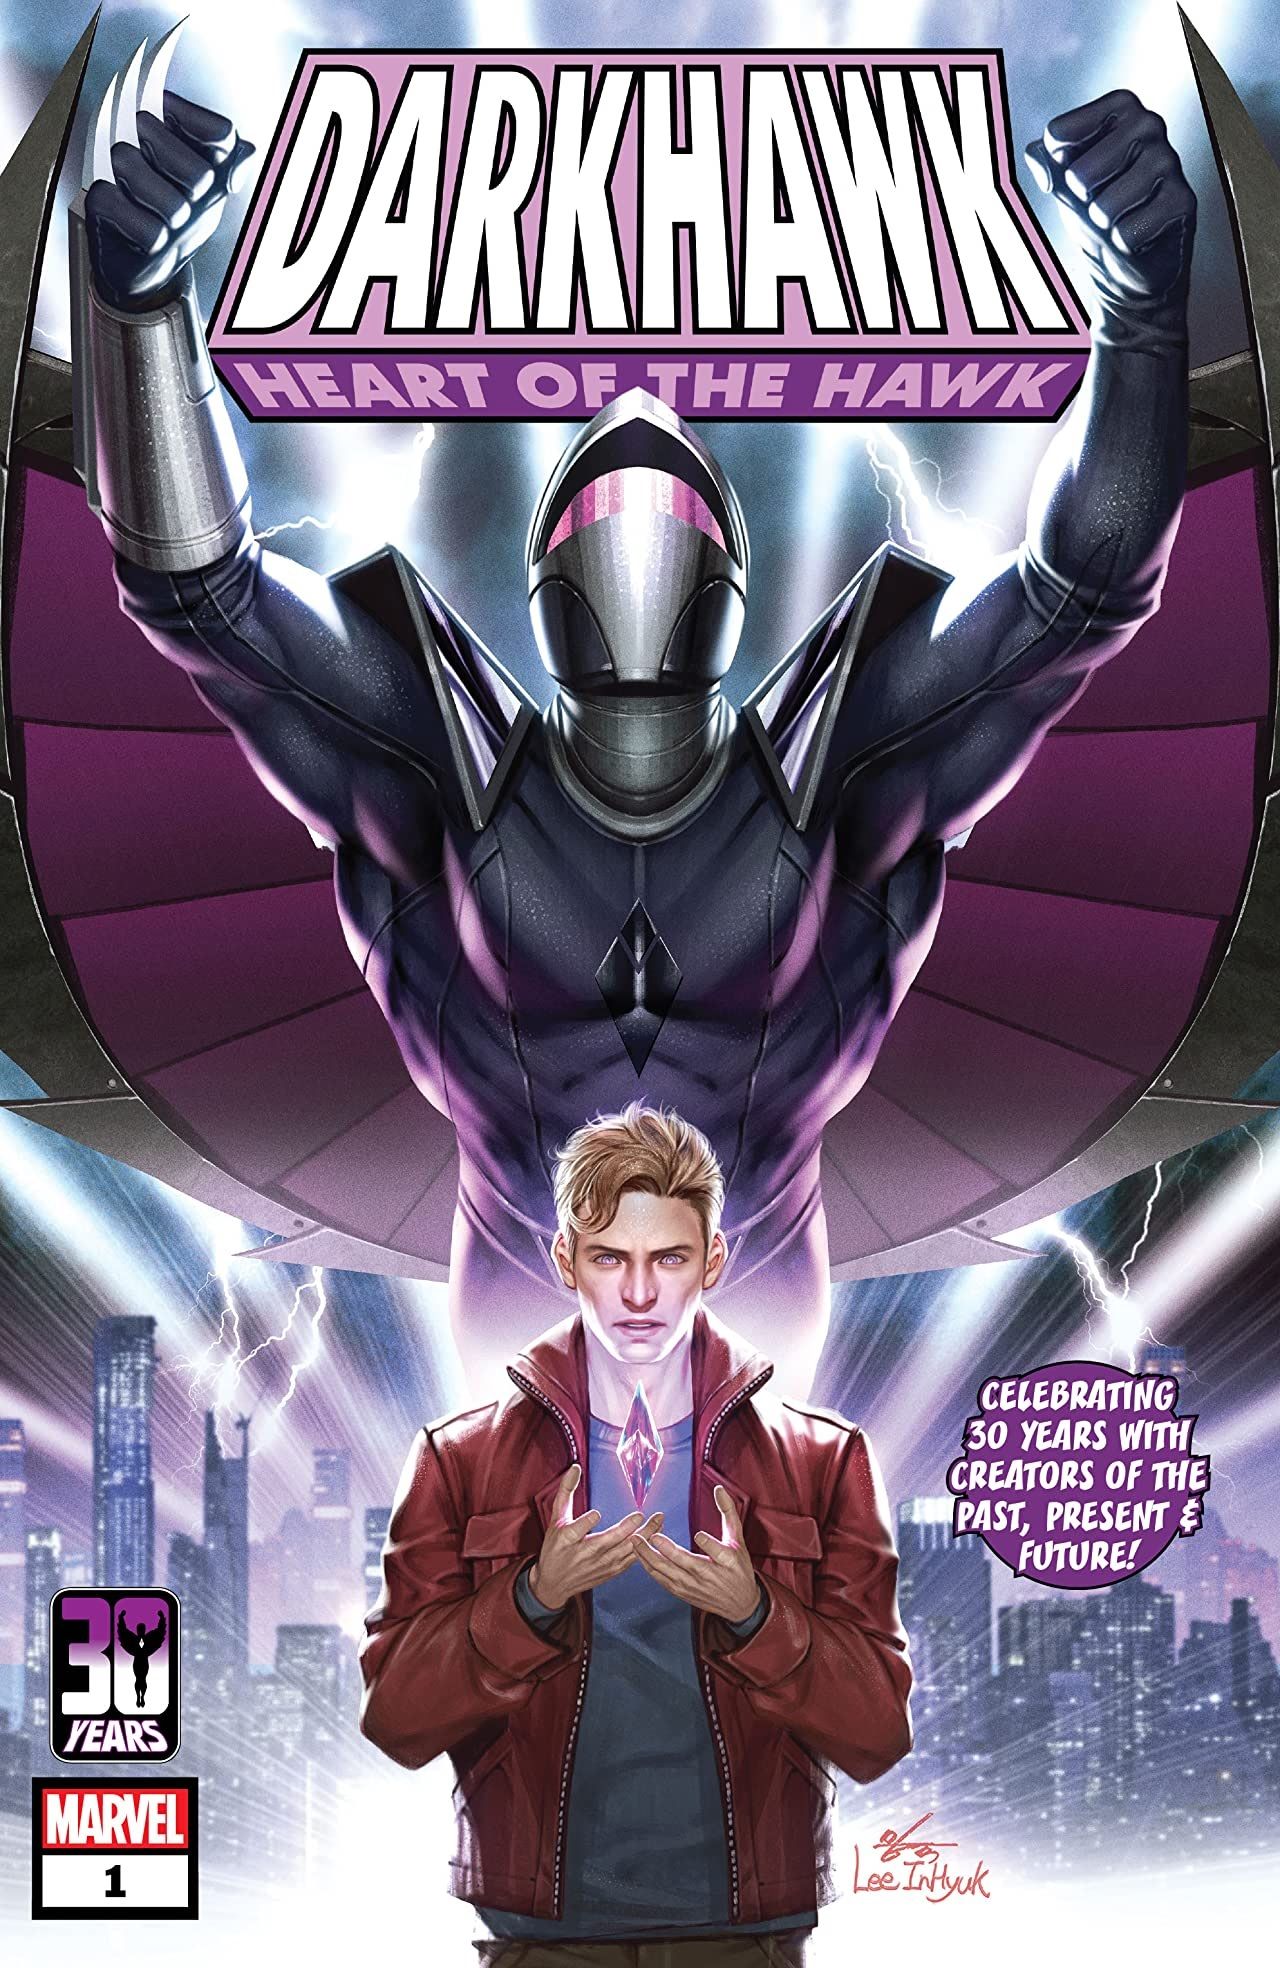 Darkhawk Heart of the Hawk 1 by InHyuk Lee